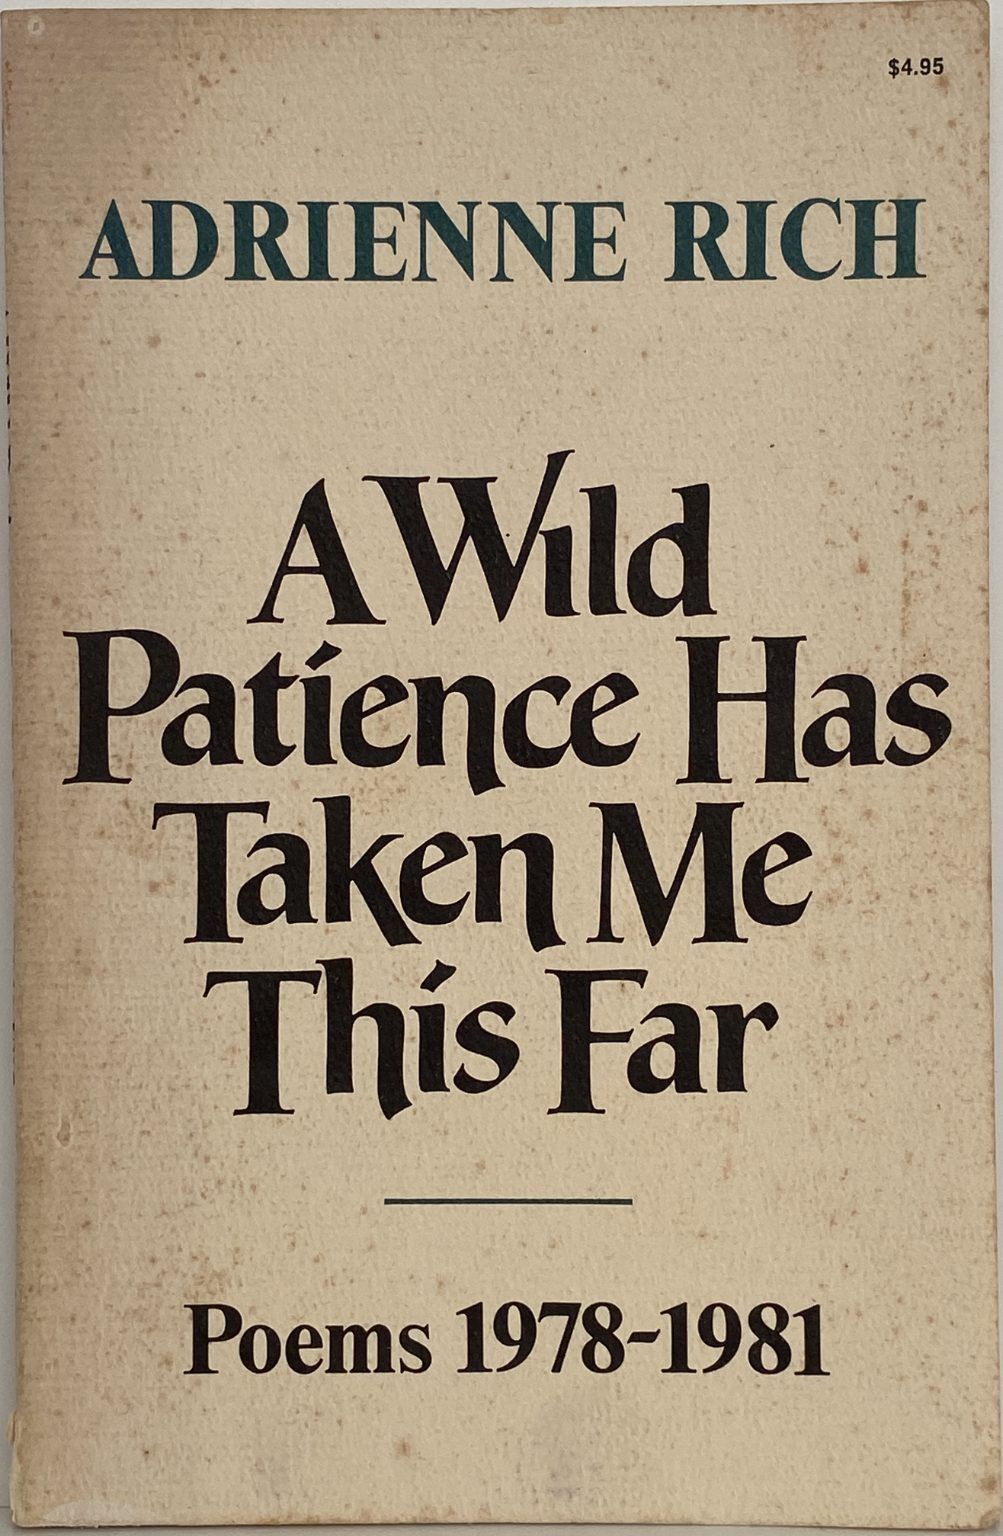 A WILD PATIENCE HAS TAKEN ME THI FAR: Poems 1978 - 1981